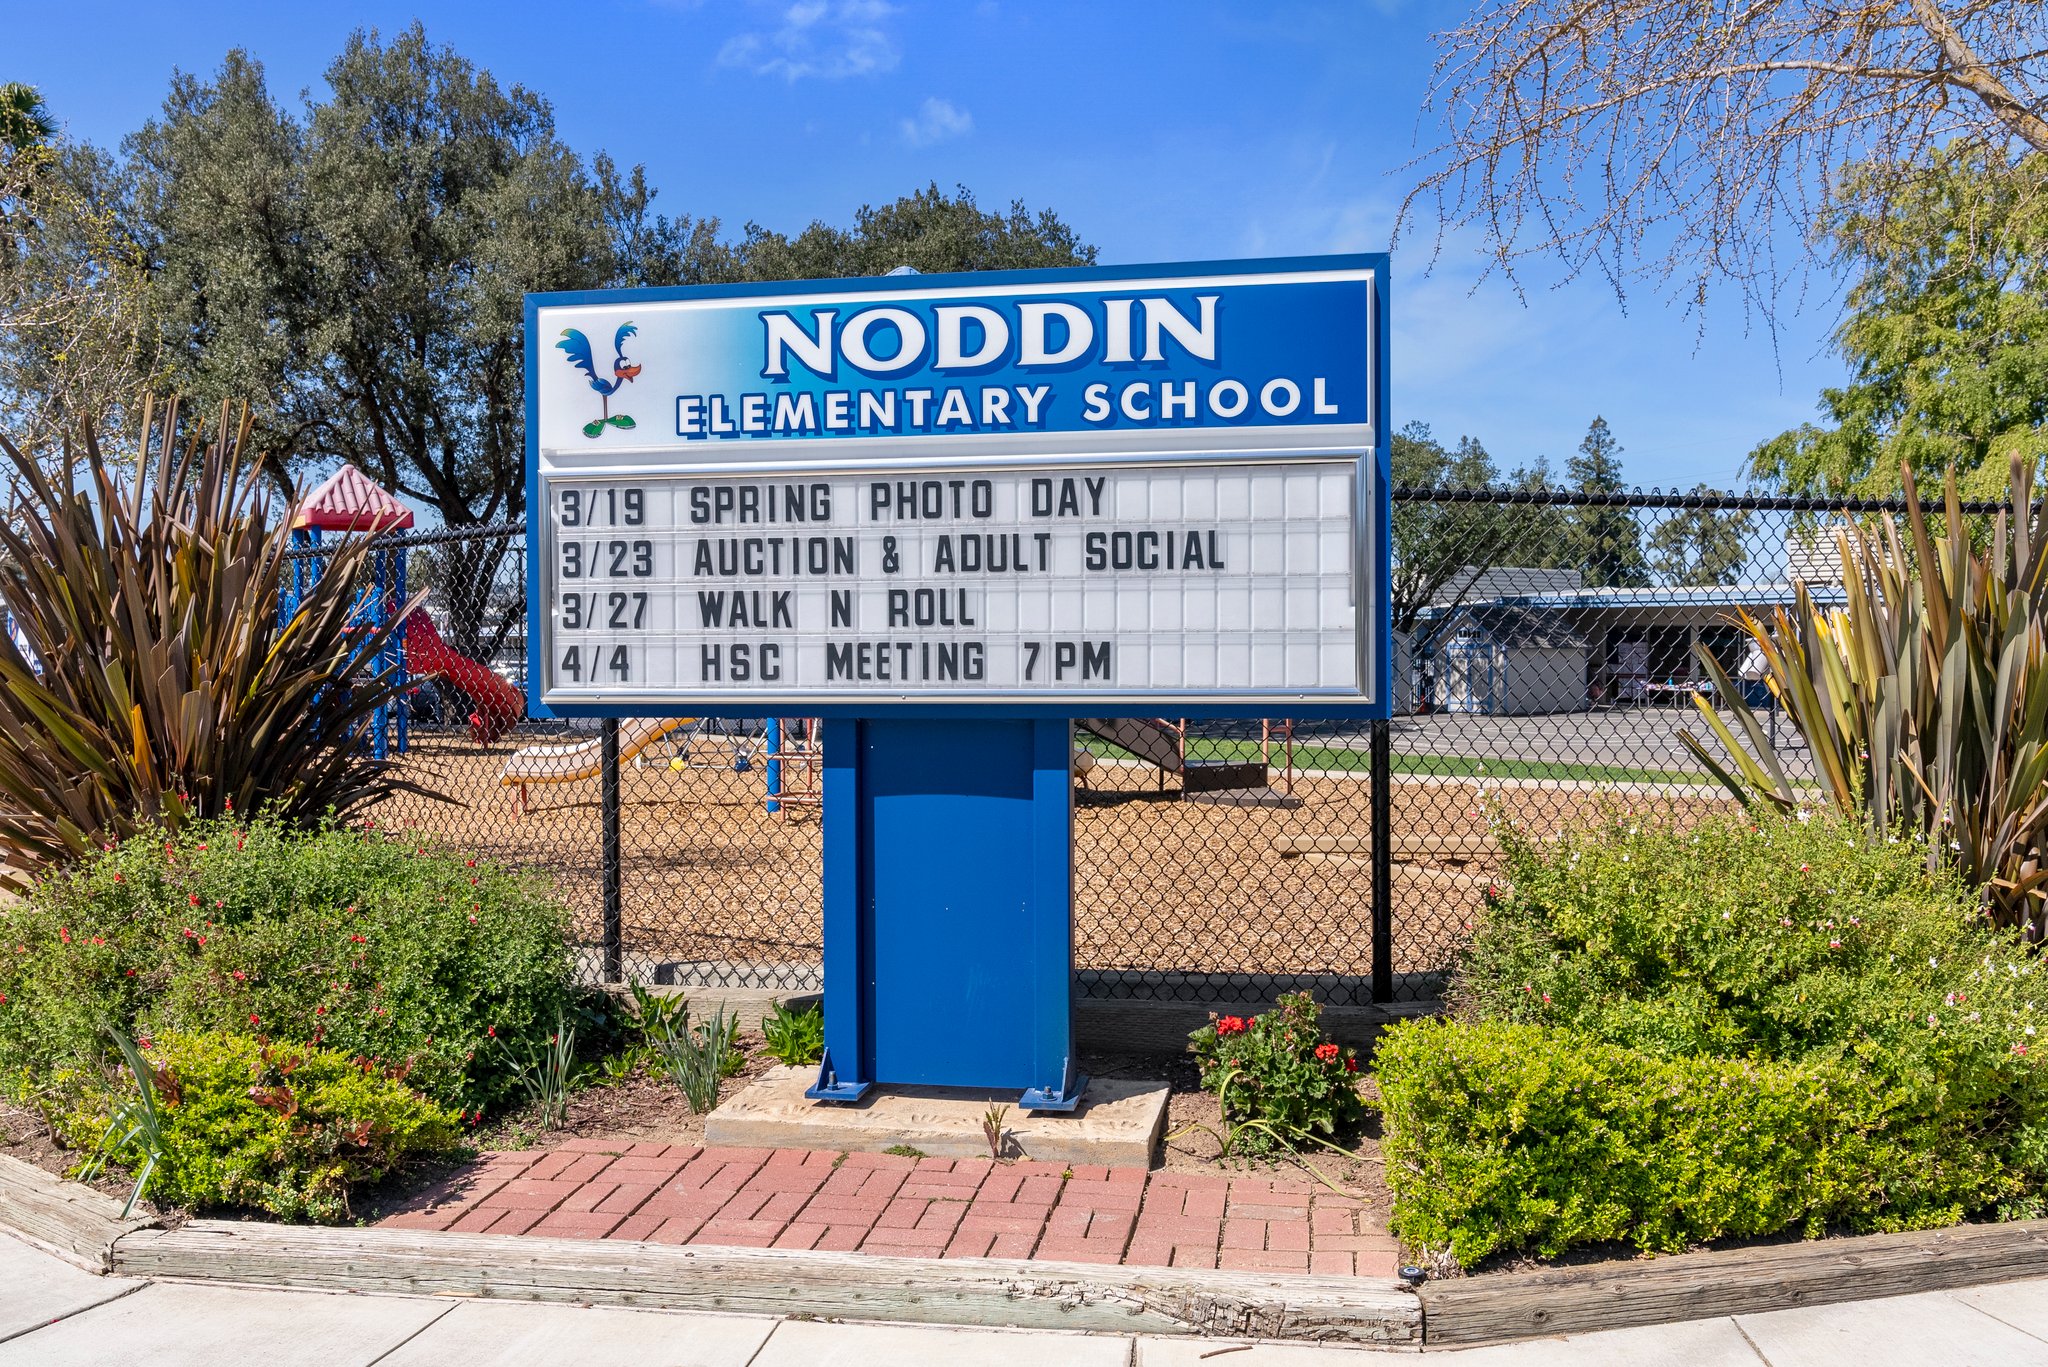 Noddin Elementary